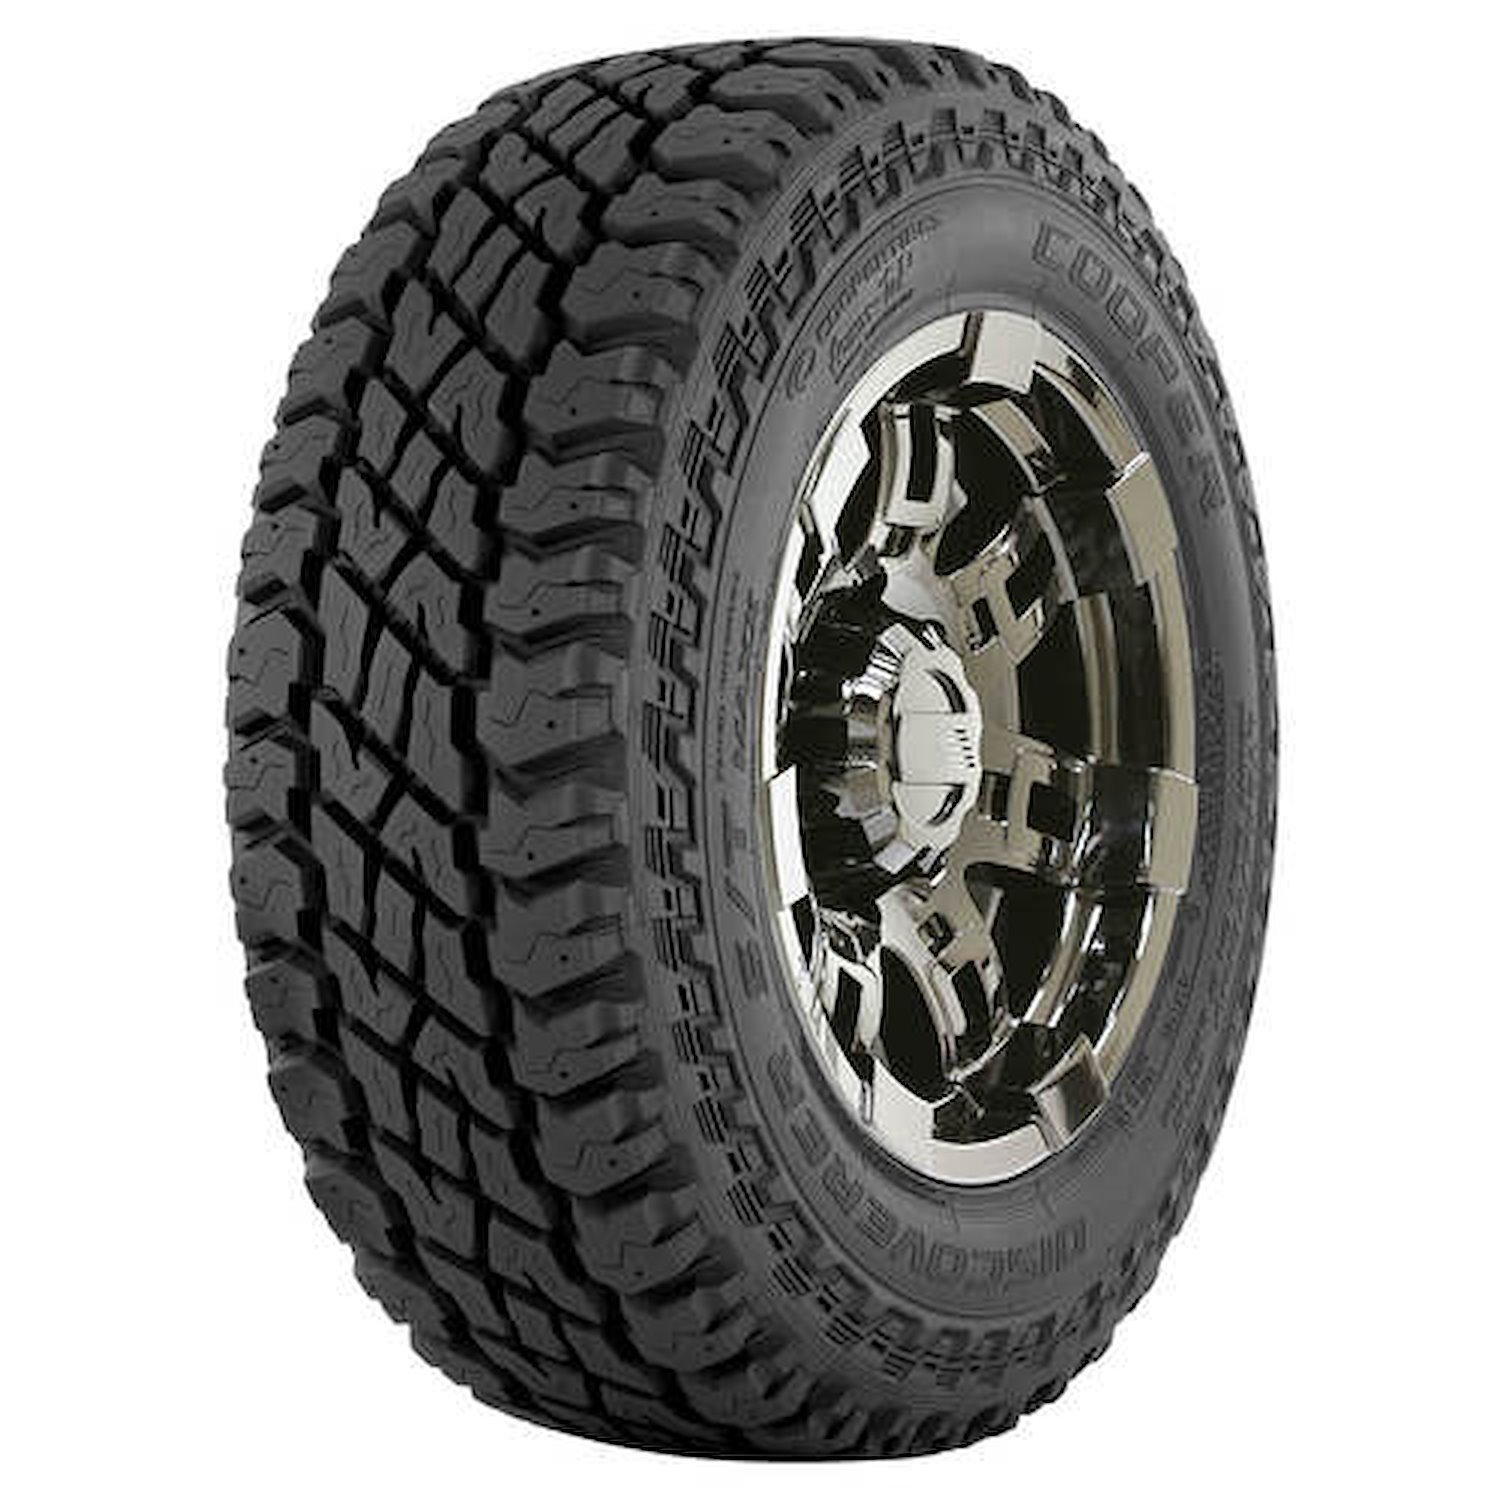 Discoverer S/T Maxx All-Terrain Tire, LT265/70R18